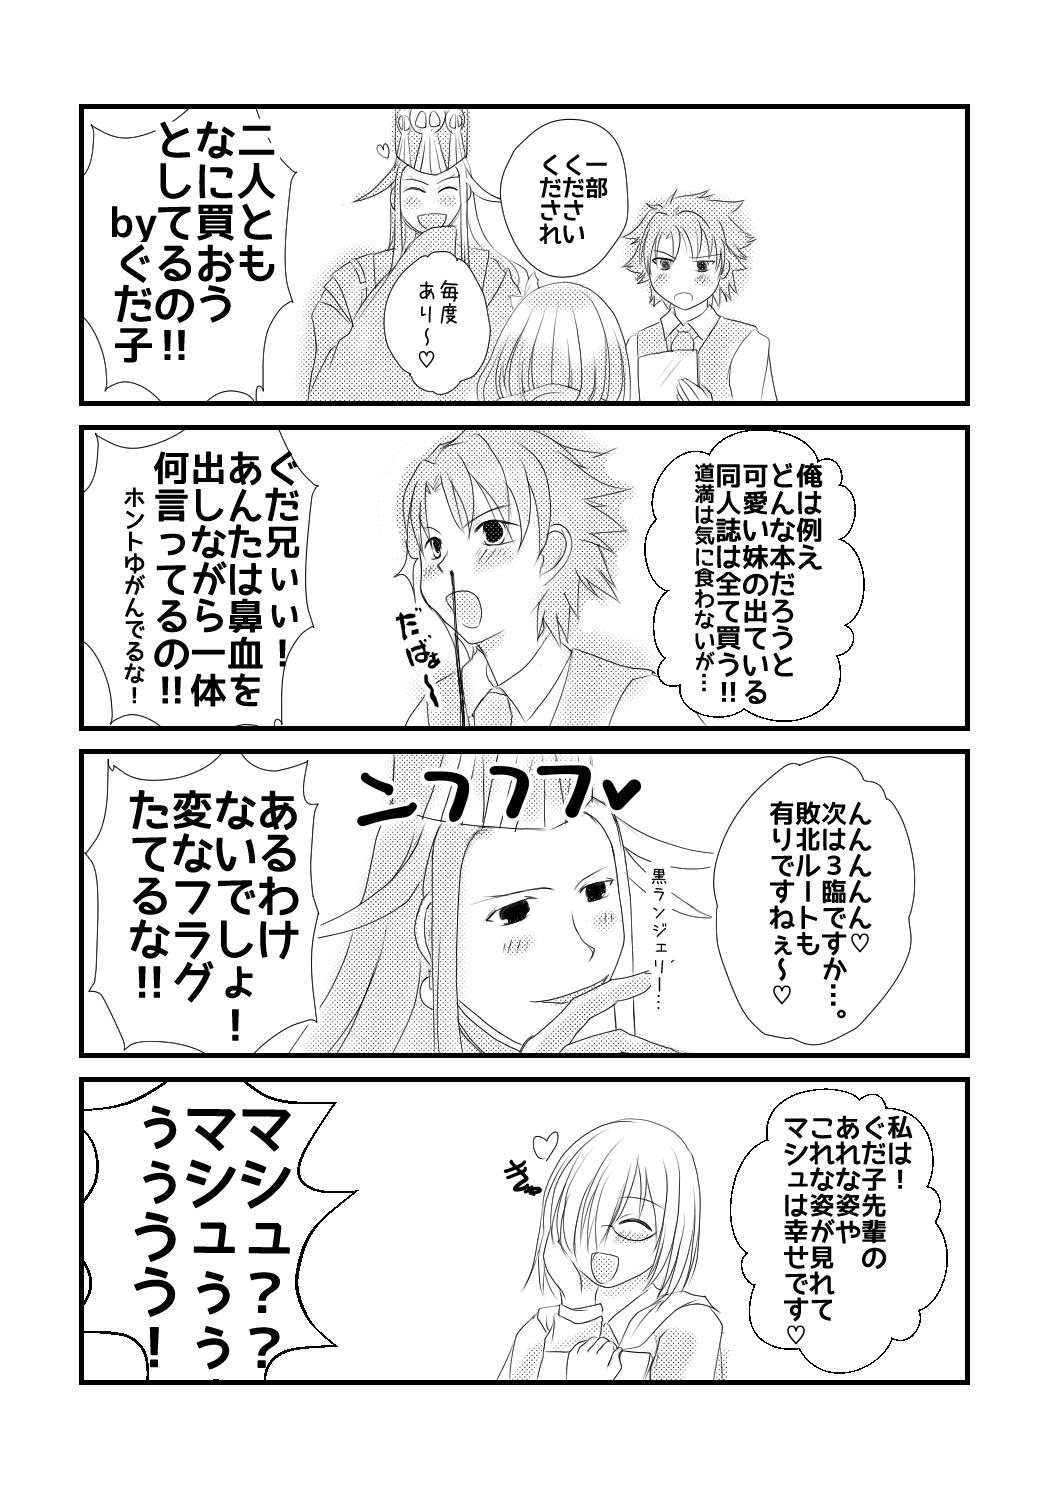 Bang ] Rin guda ♀ rakugaki guda yuru manga(Fate/Grand Order] - Fate grand order Interacial - Page 7